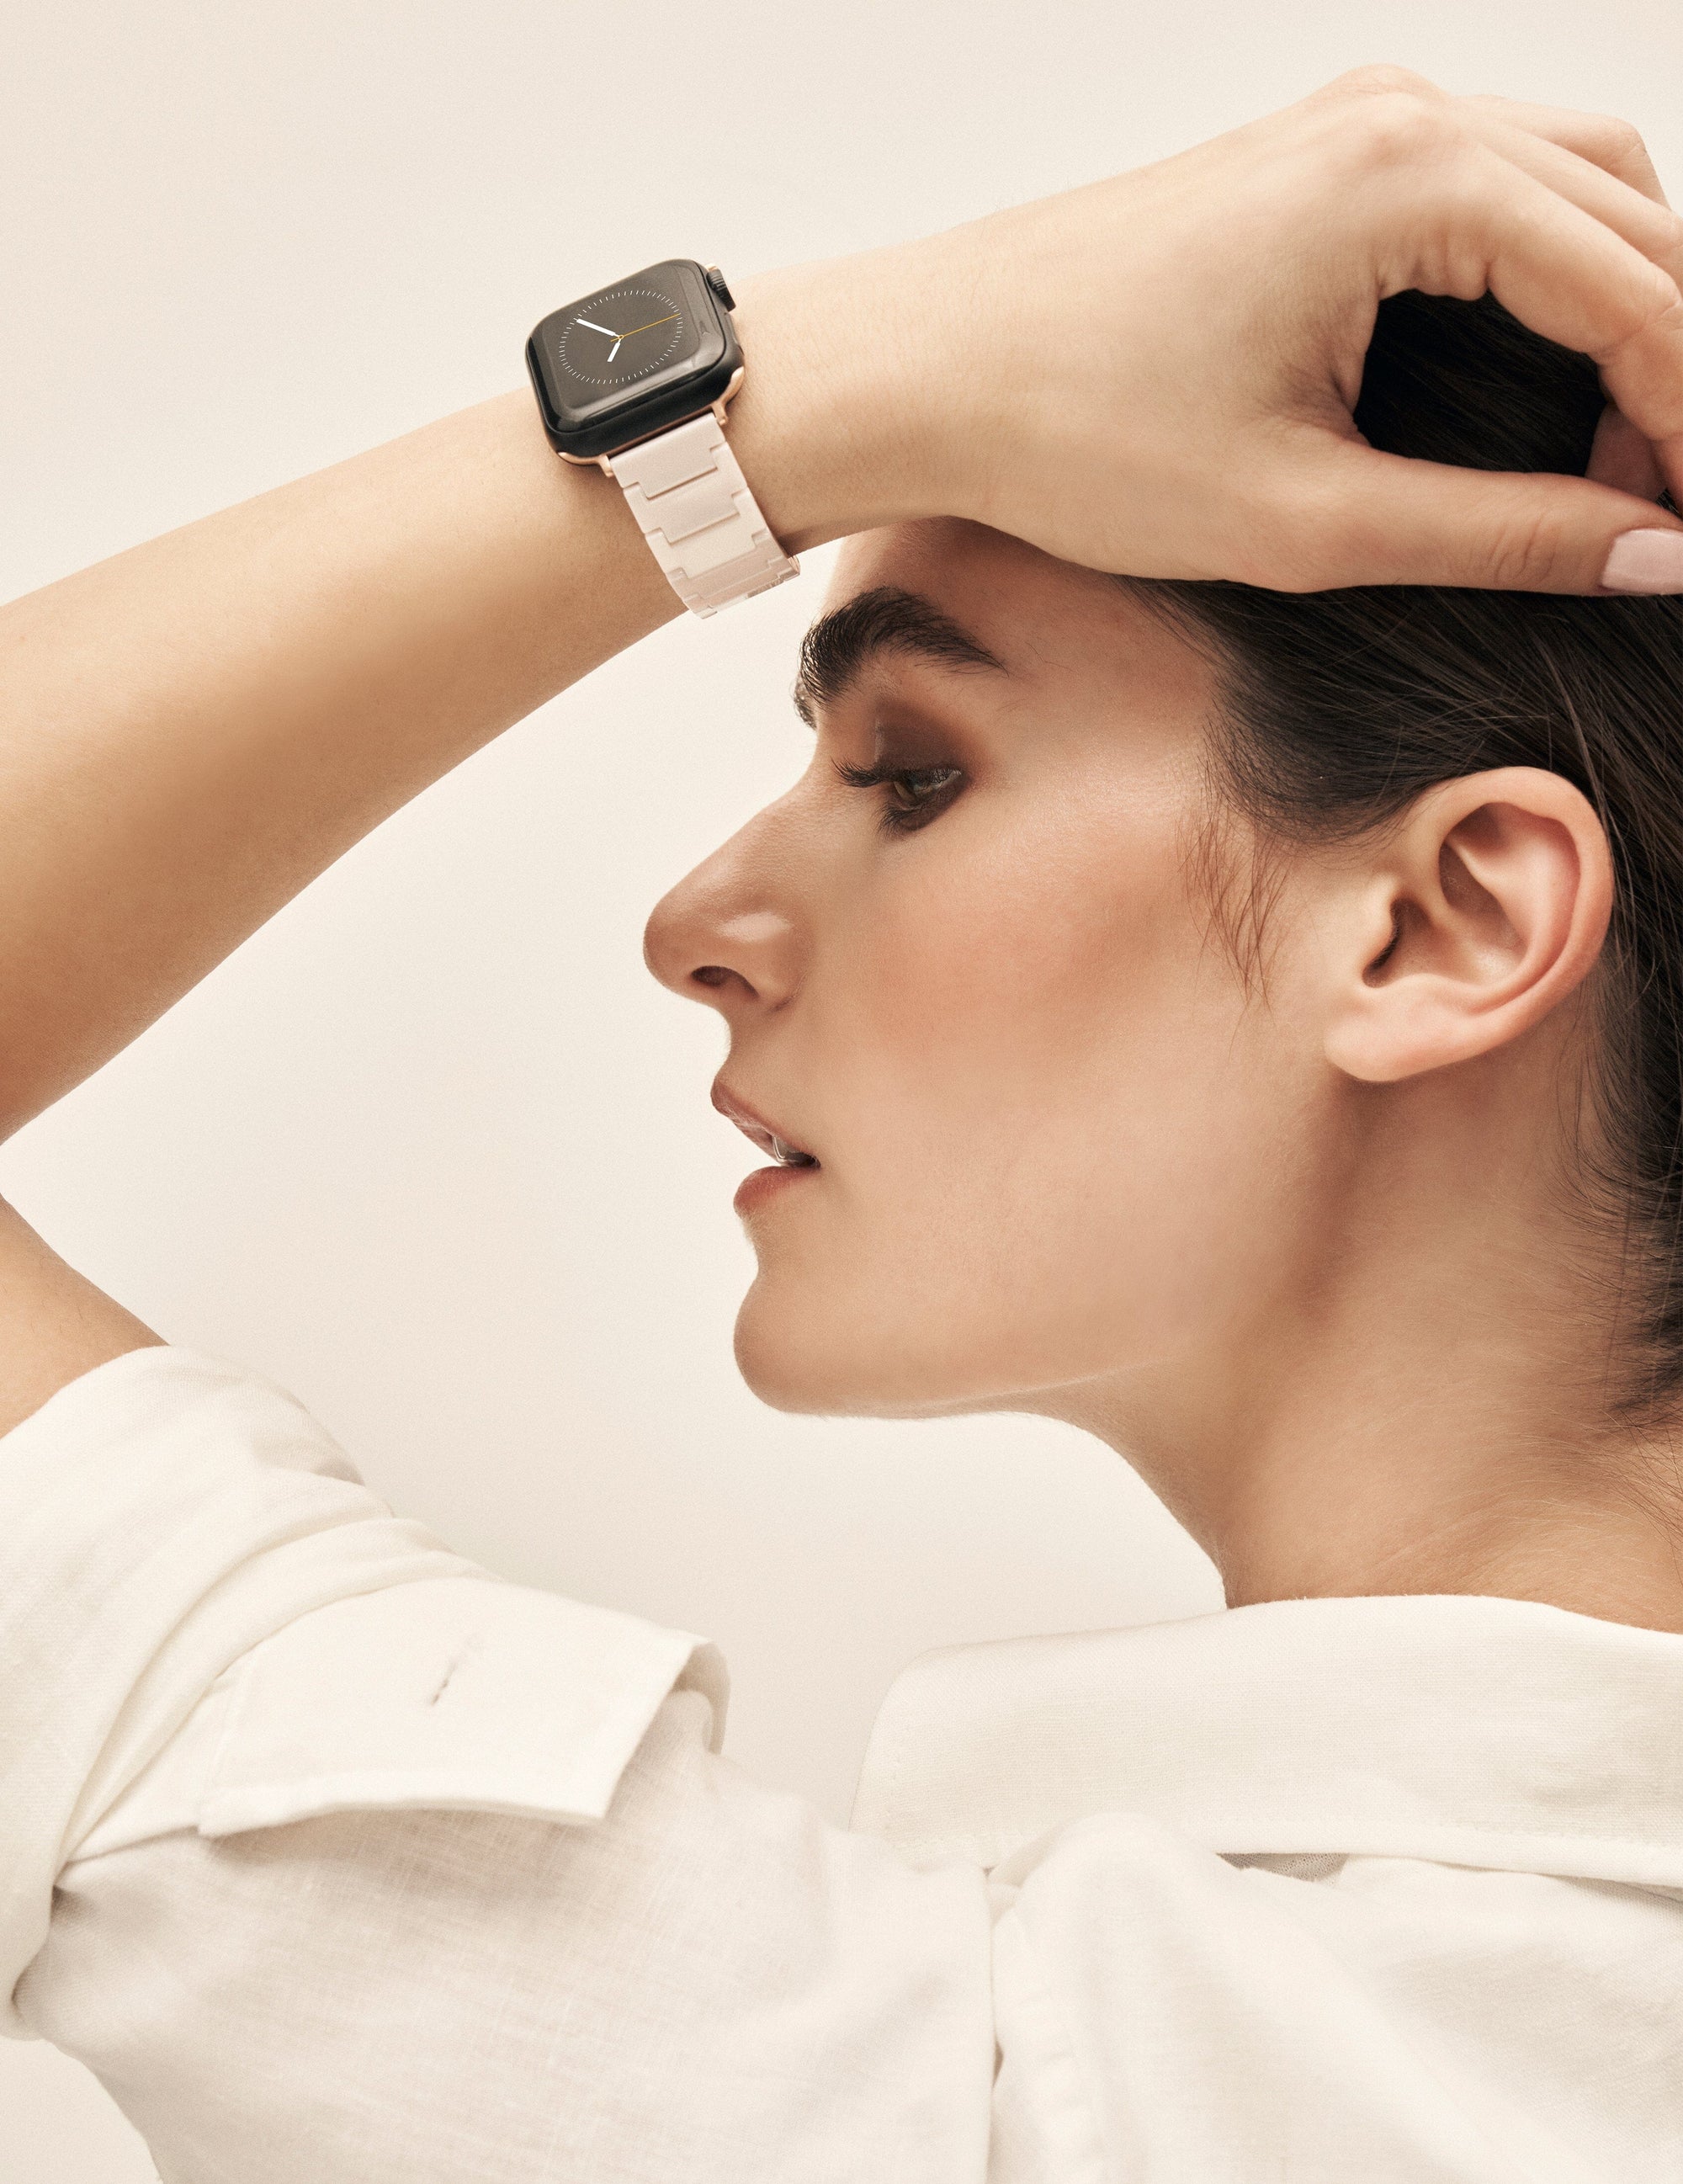 For Apple Watch Band Ceramic Strap Fashion Ladies Wristwatch 38mm